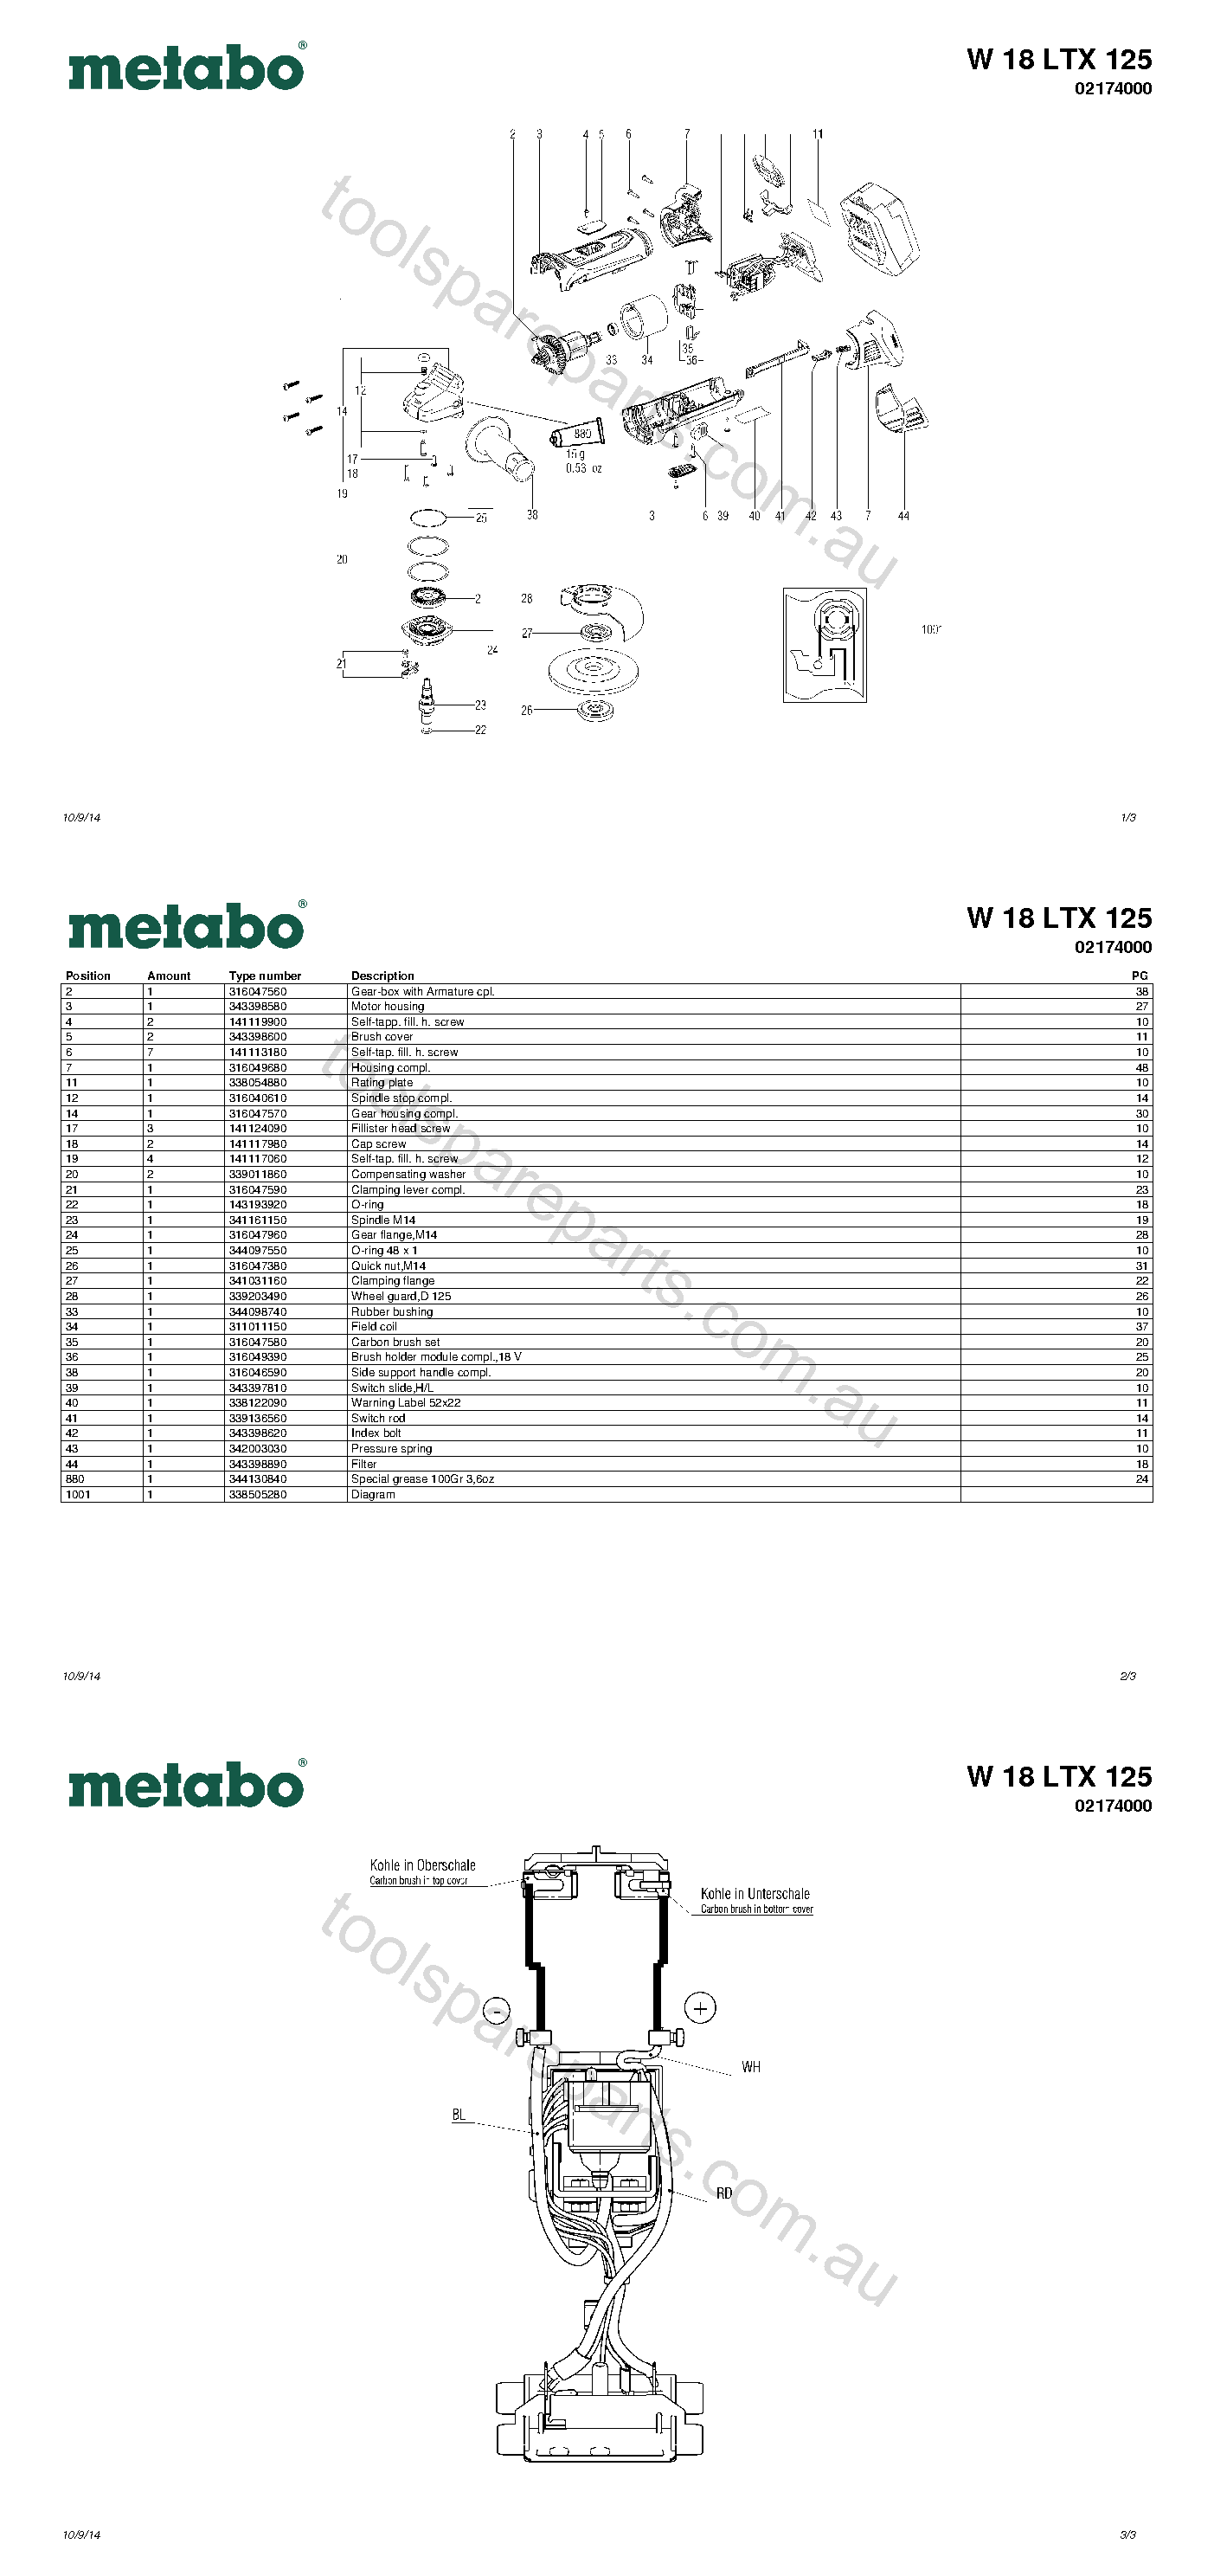 Metabo W 18 LTX 125 02174000  Diagram 1